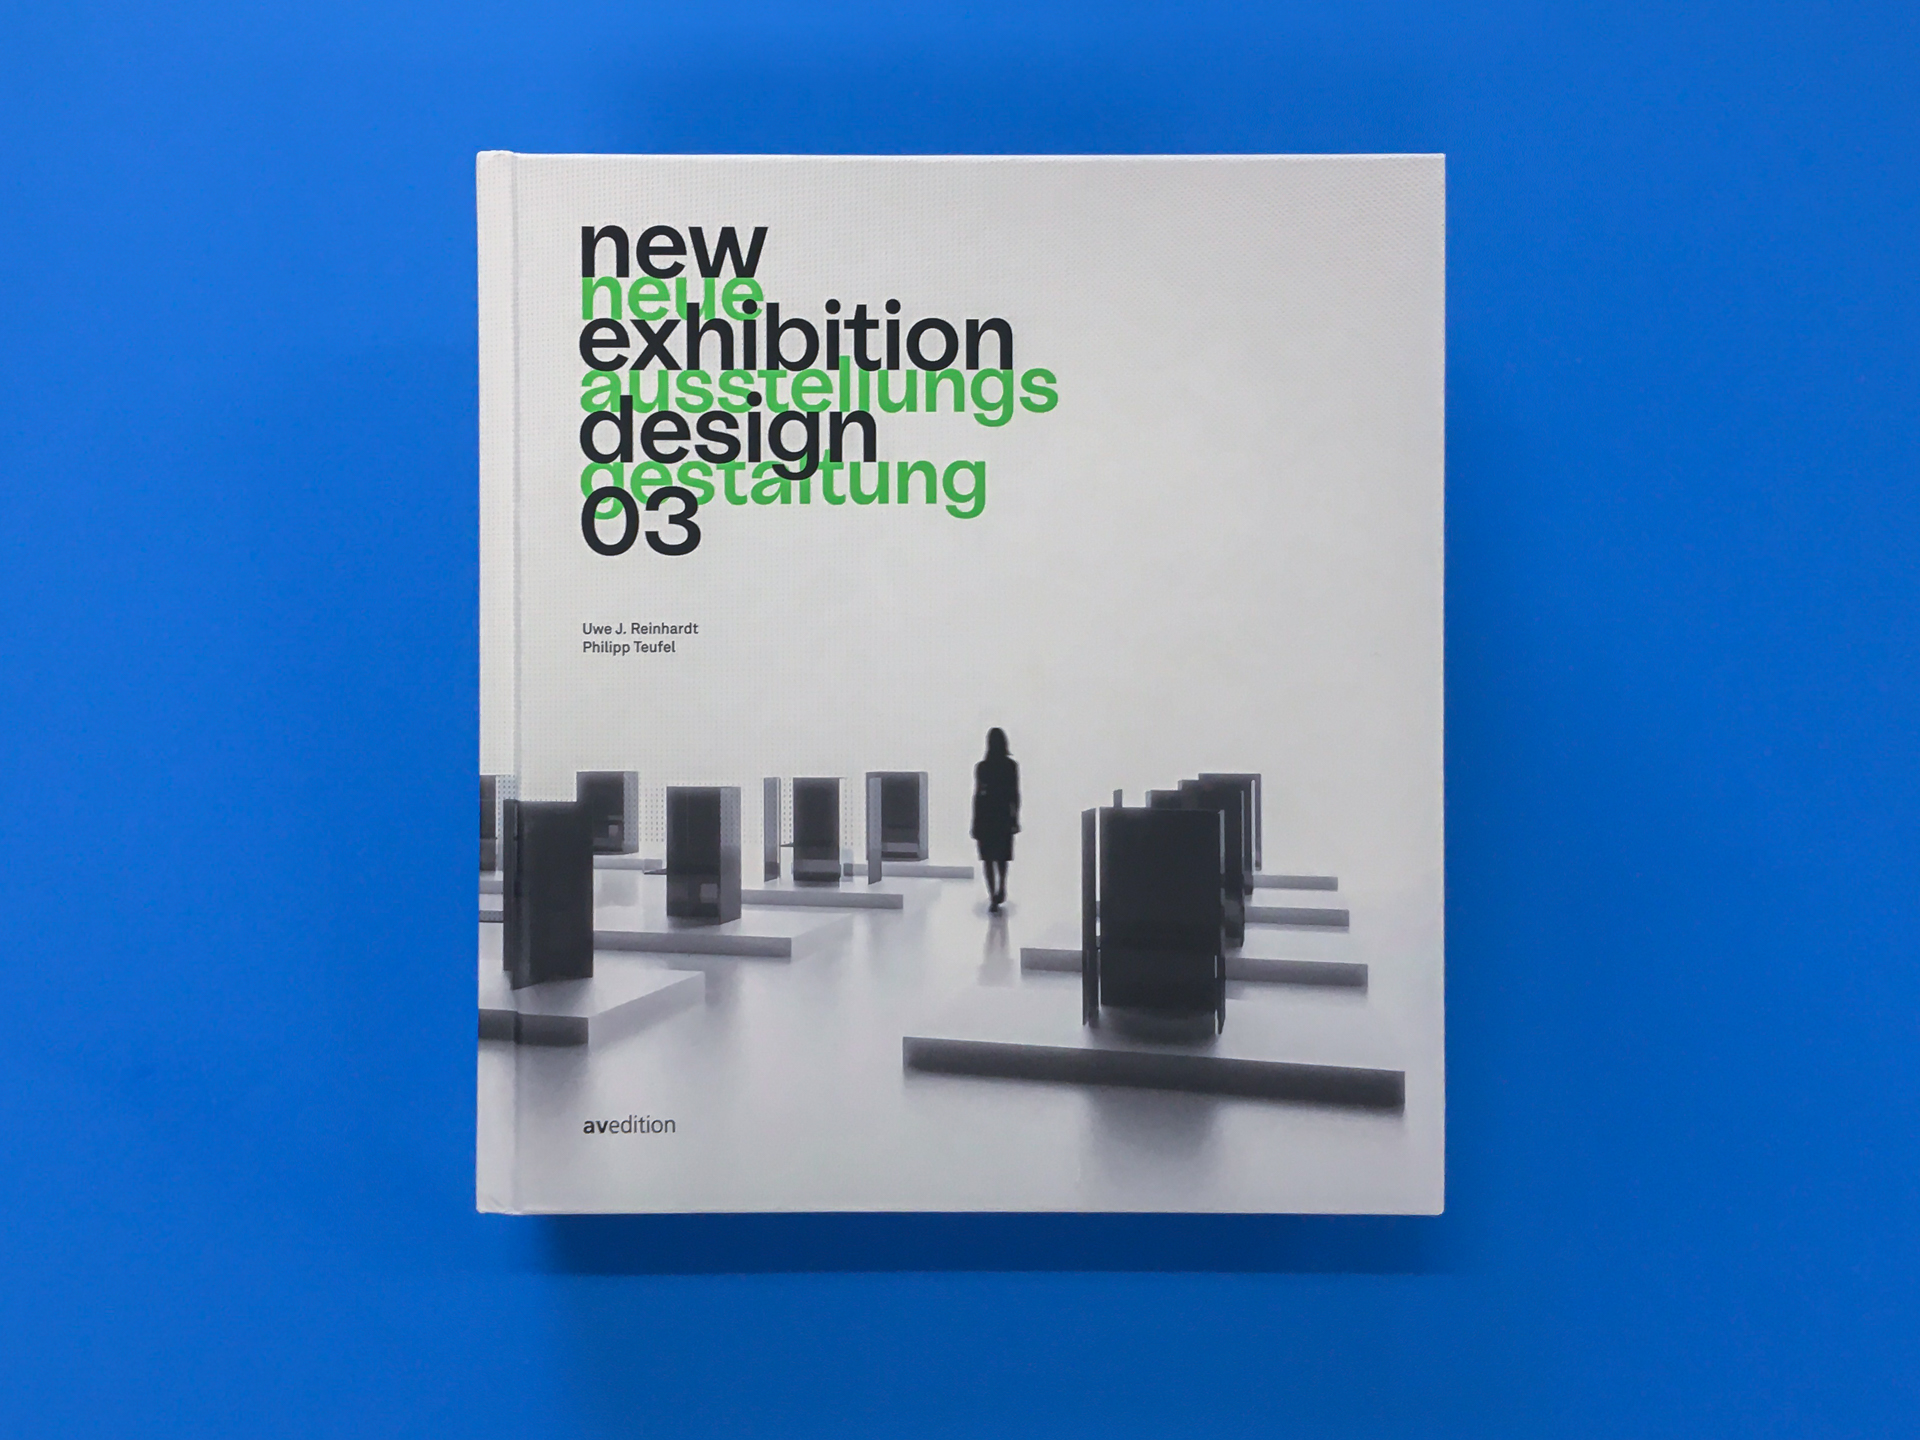 dvvd na tm new exhibition design 03 book 1 home 1 jpg